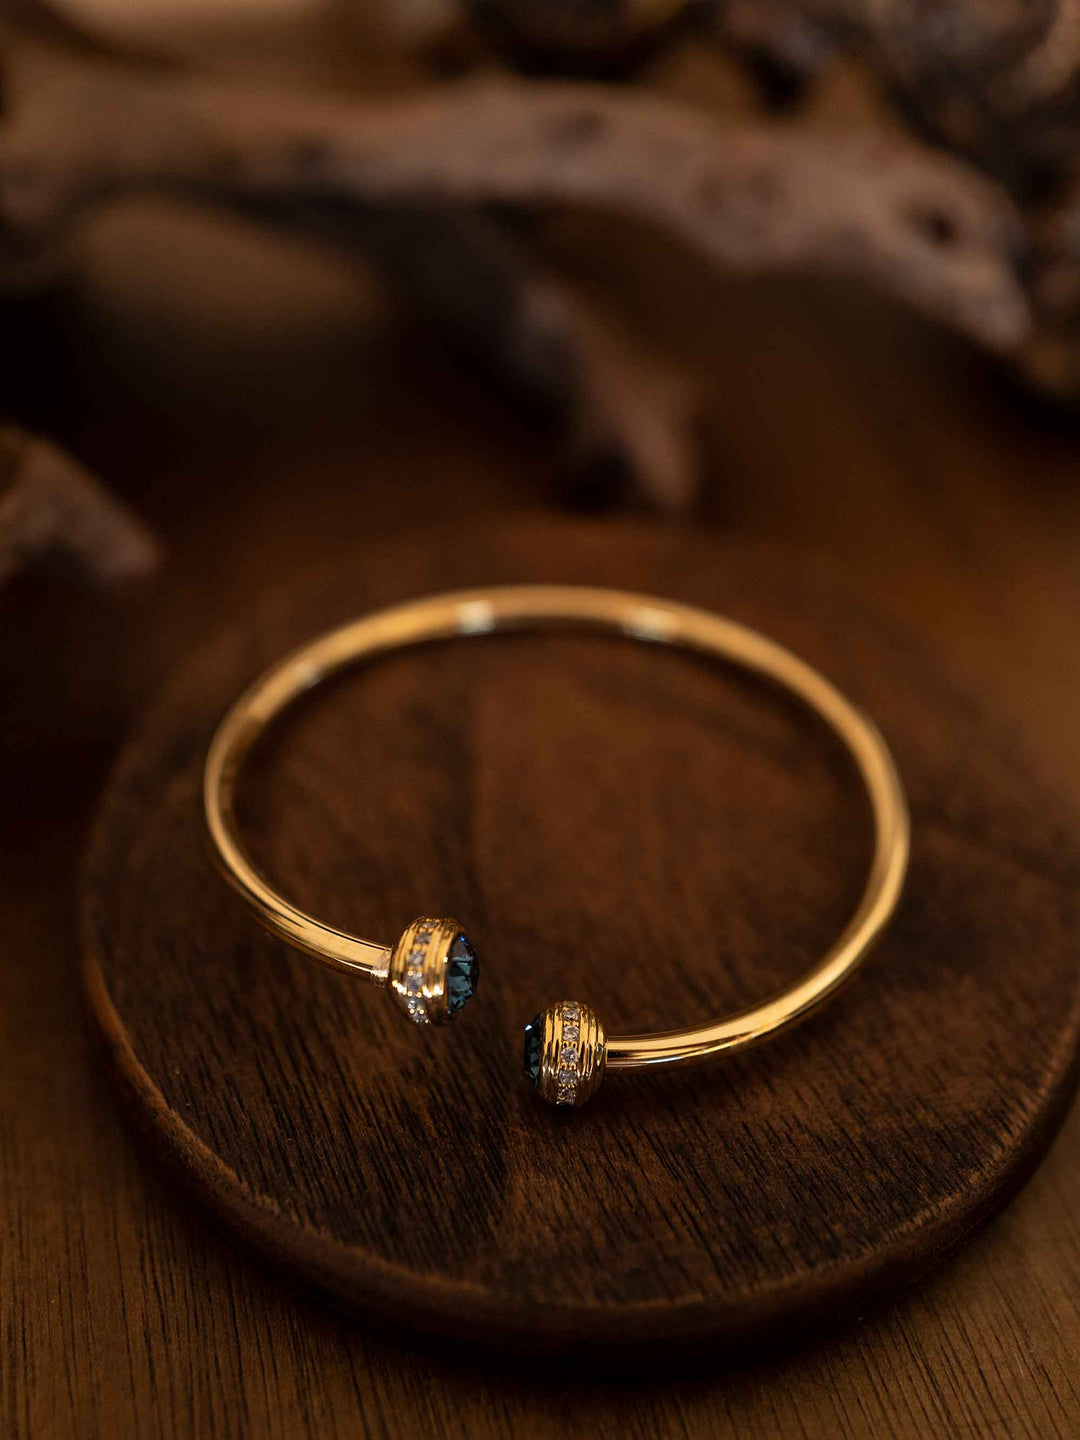 A gold bracelet with blue stones